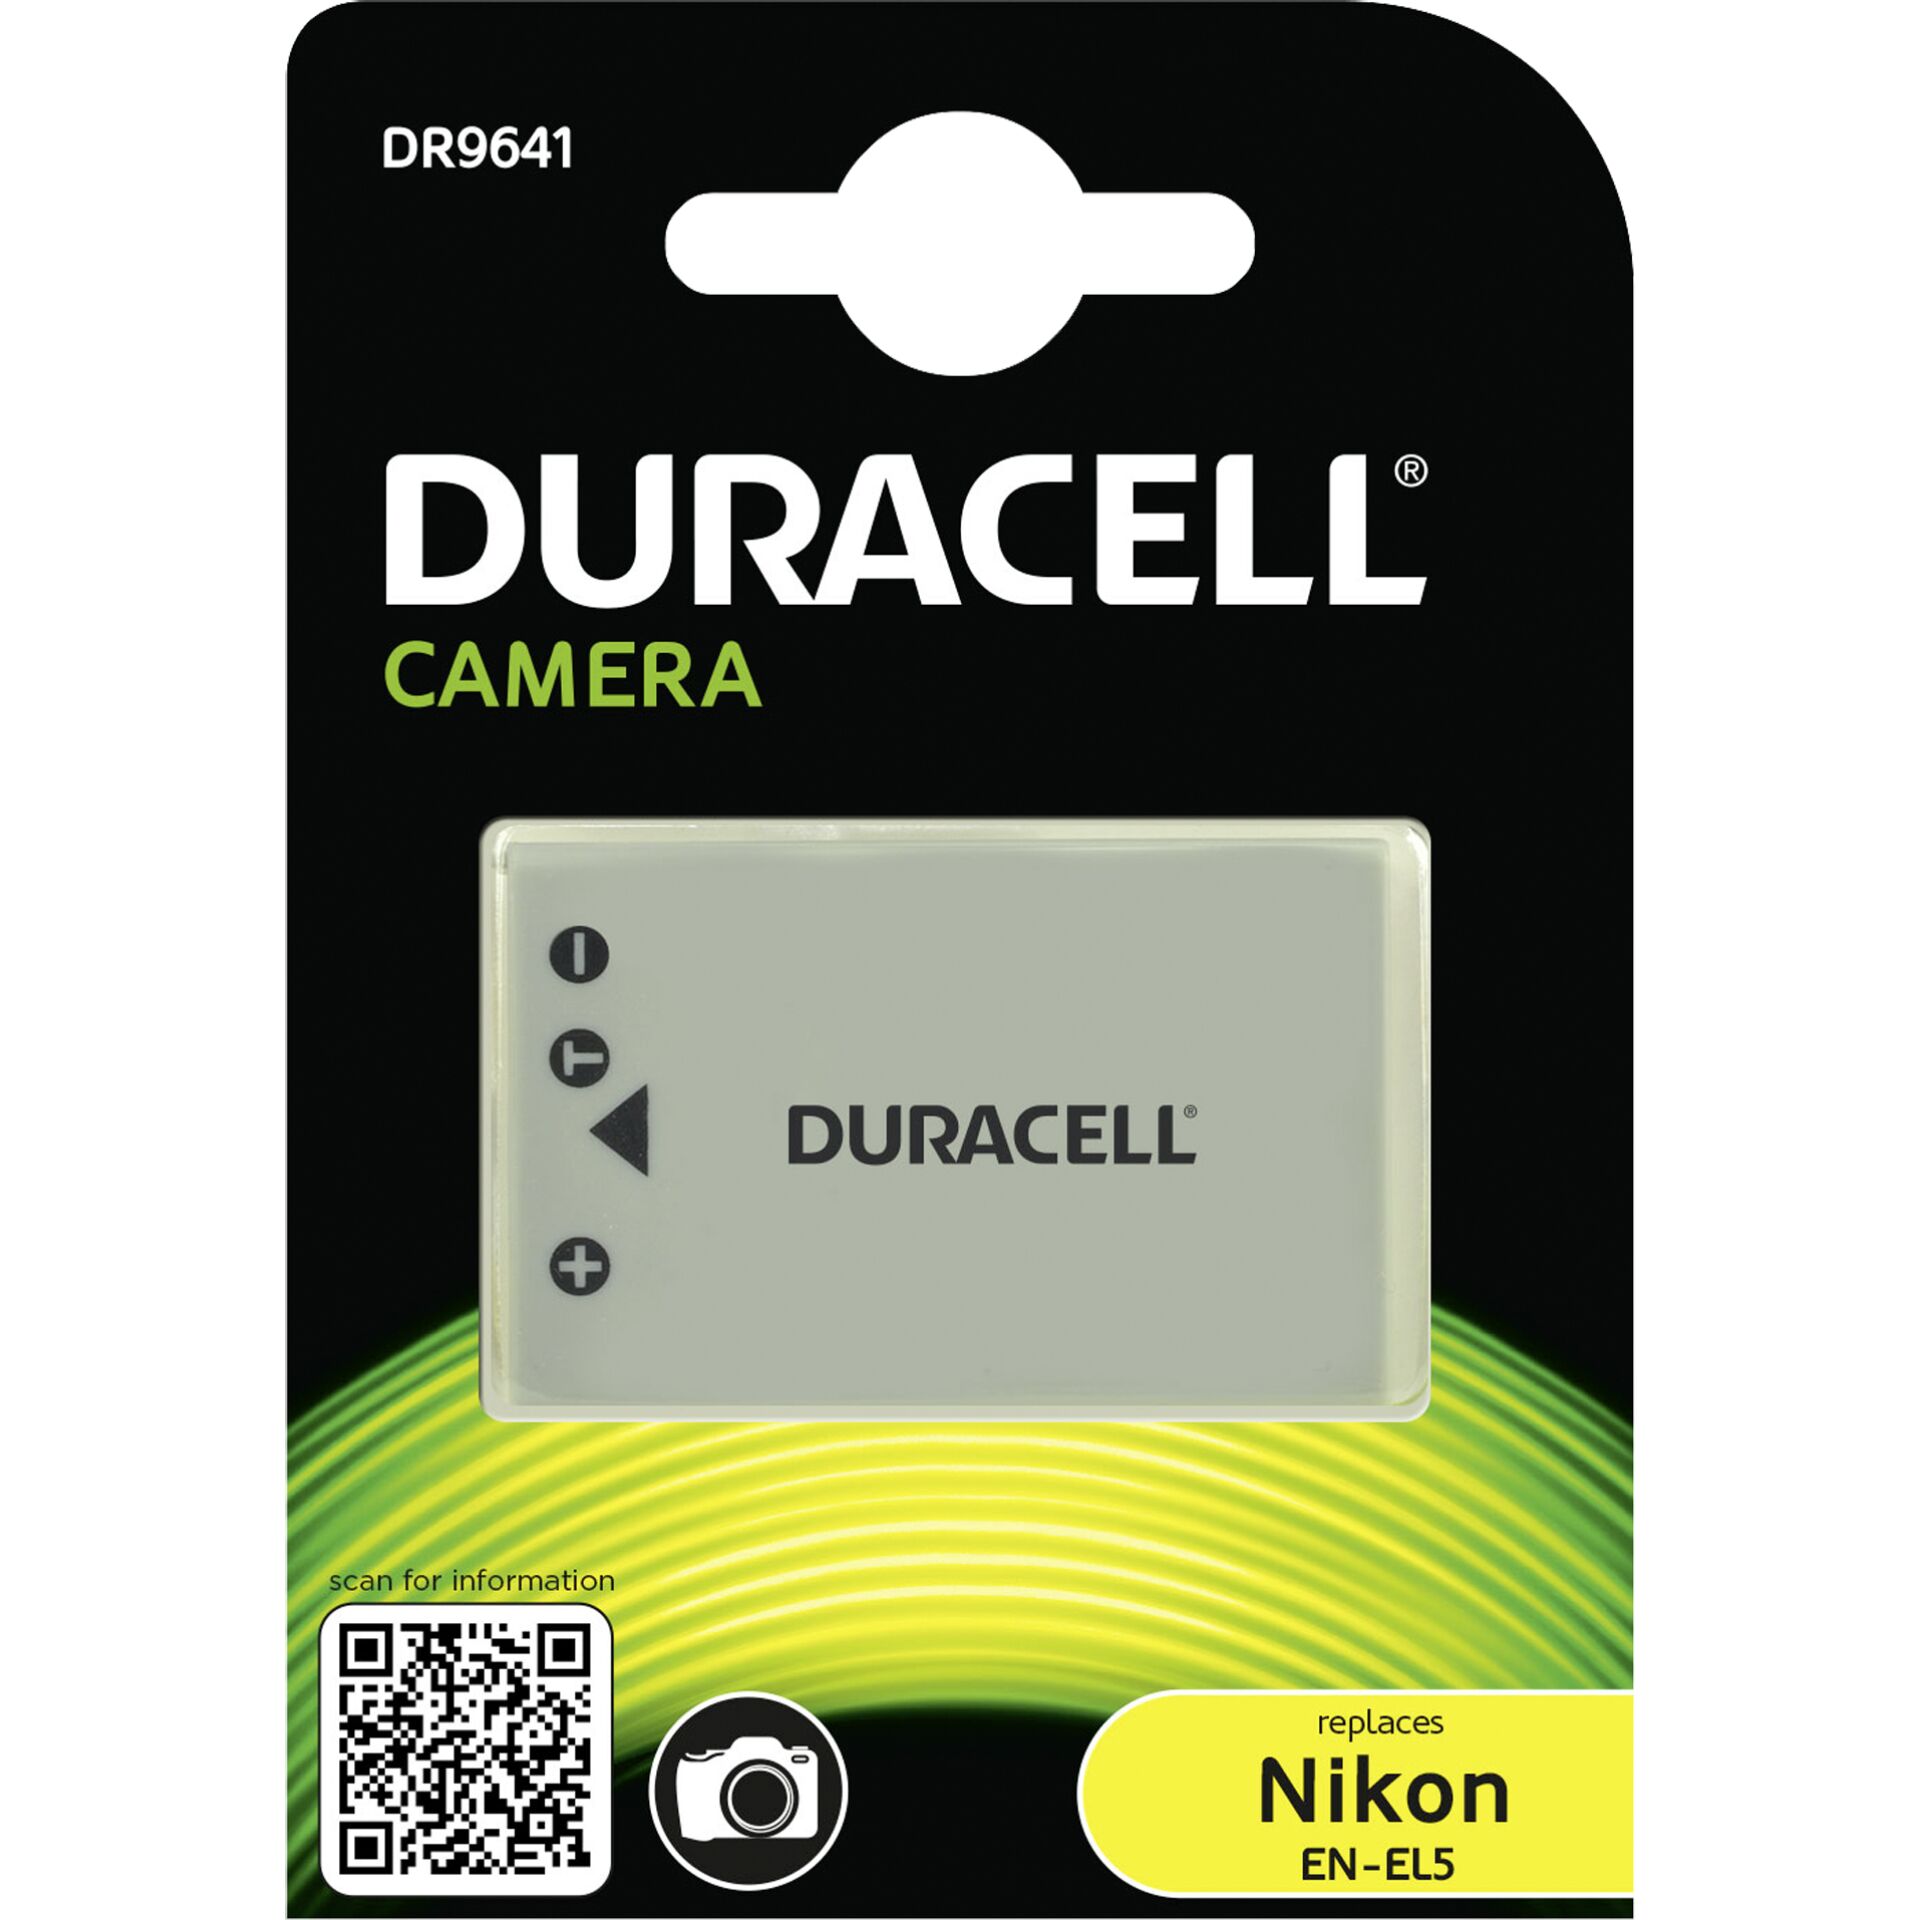 Duracell DR9641 Kamera-/Camcorder-Akku Lithium-Ion (Li-Ion) 1180 mAh